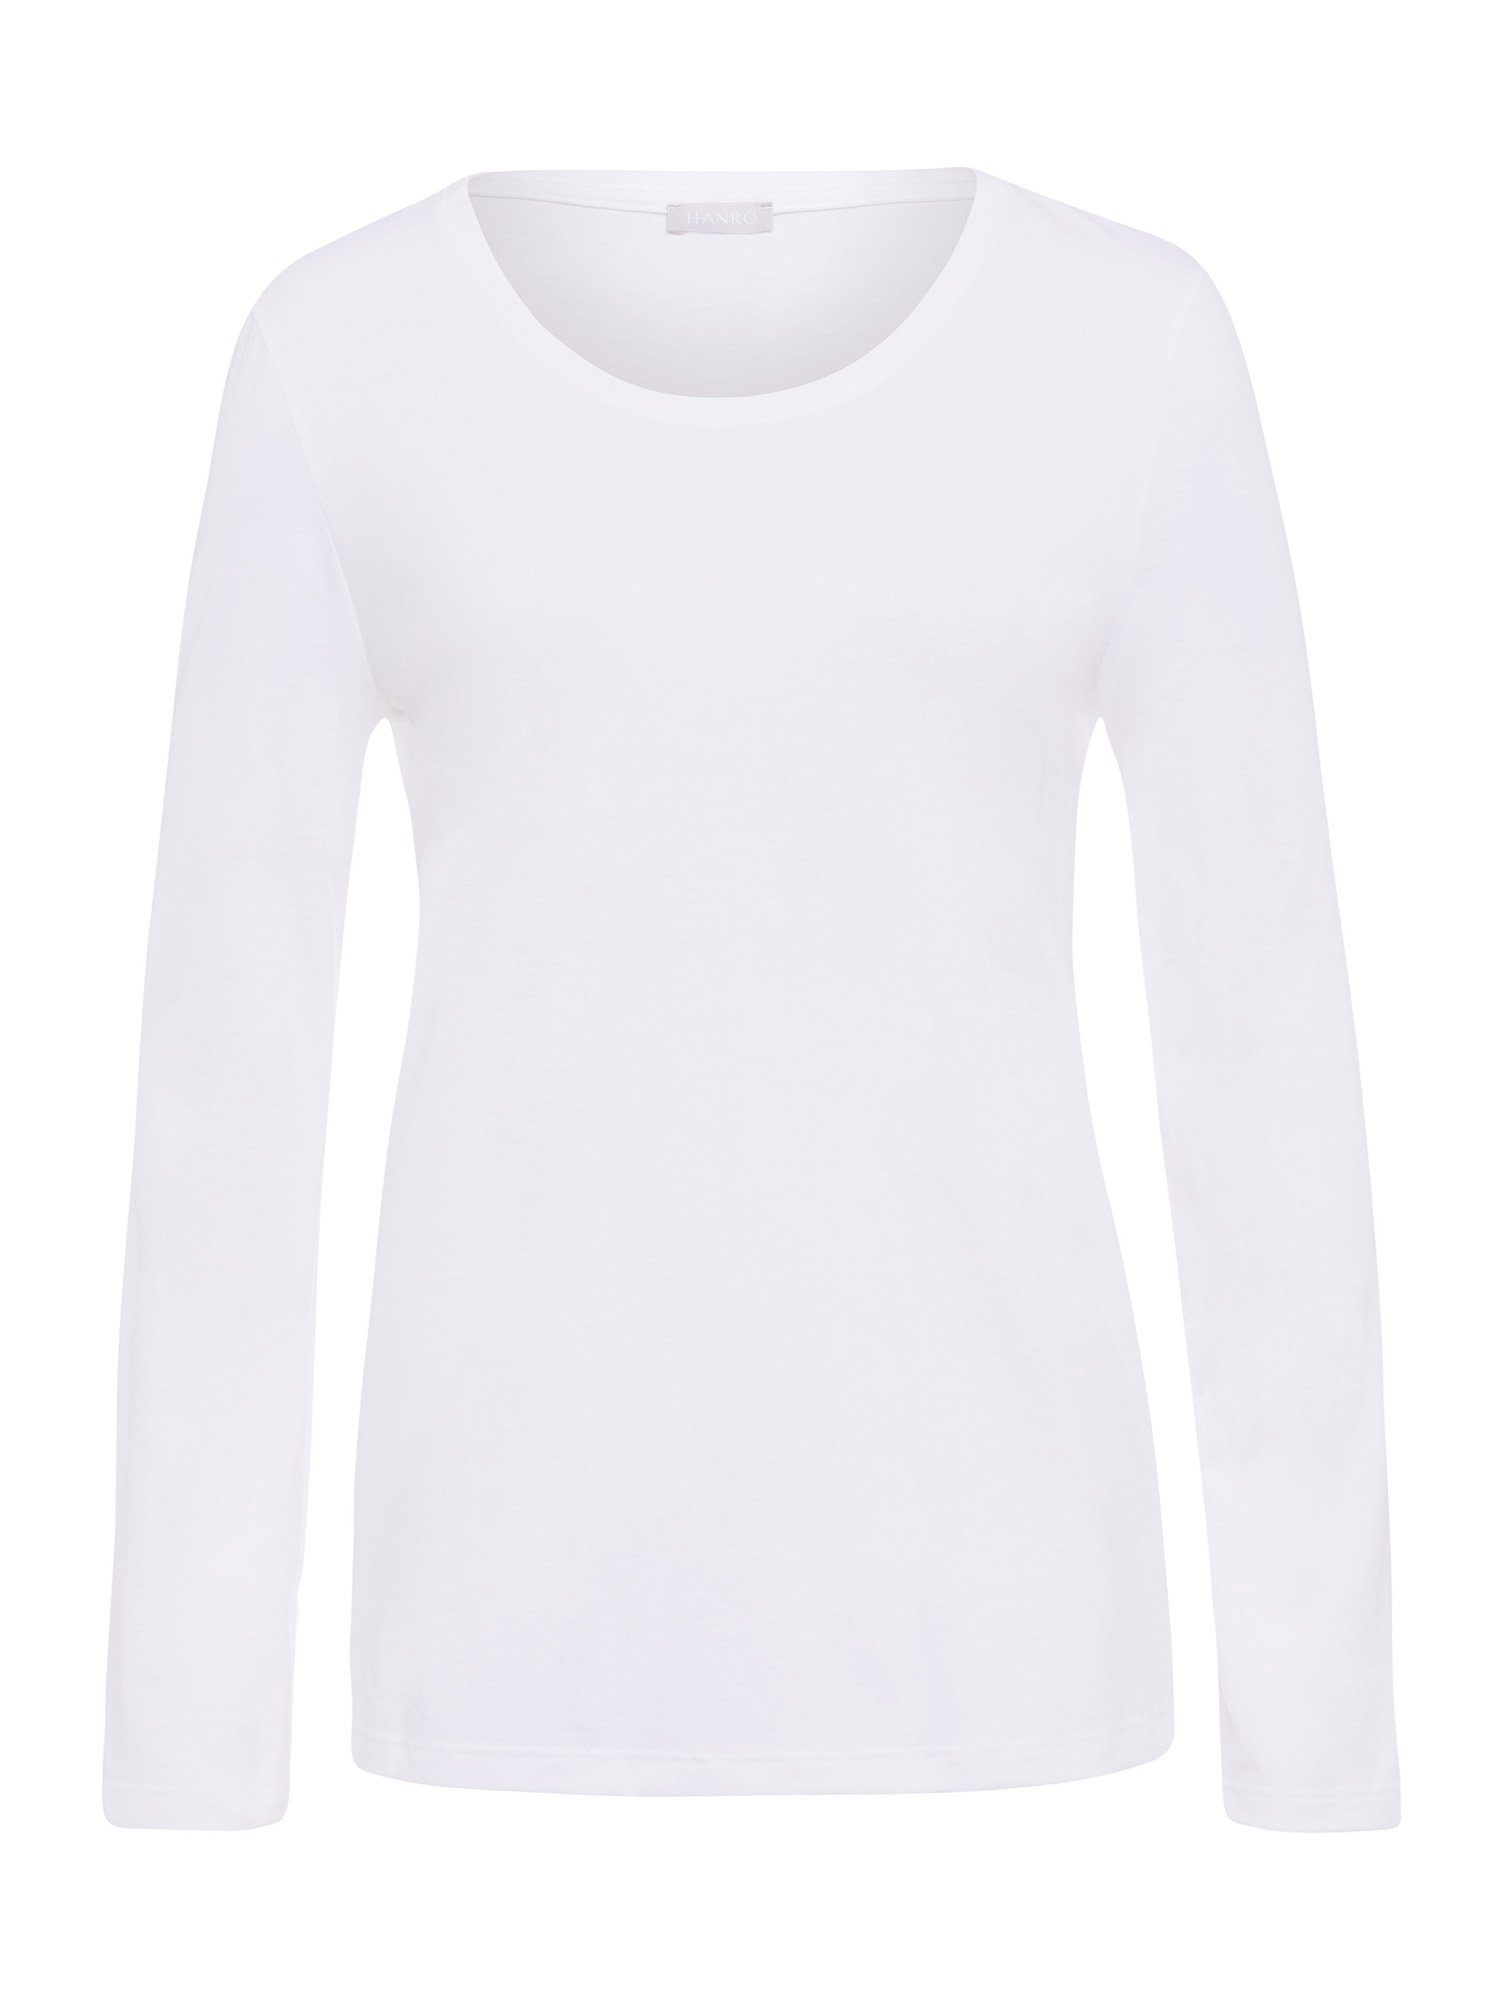 Hanro Pyjamaoberteil Sleep & unterhemd shirt white Lounge langarm